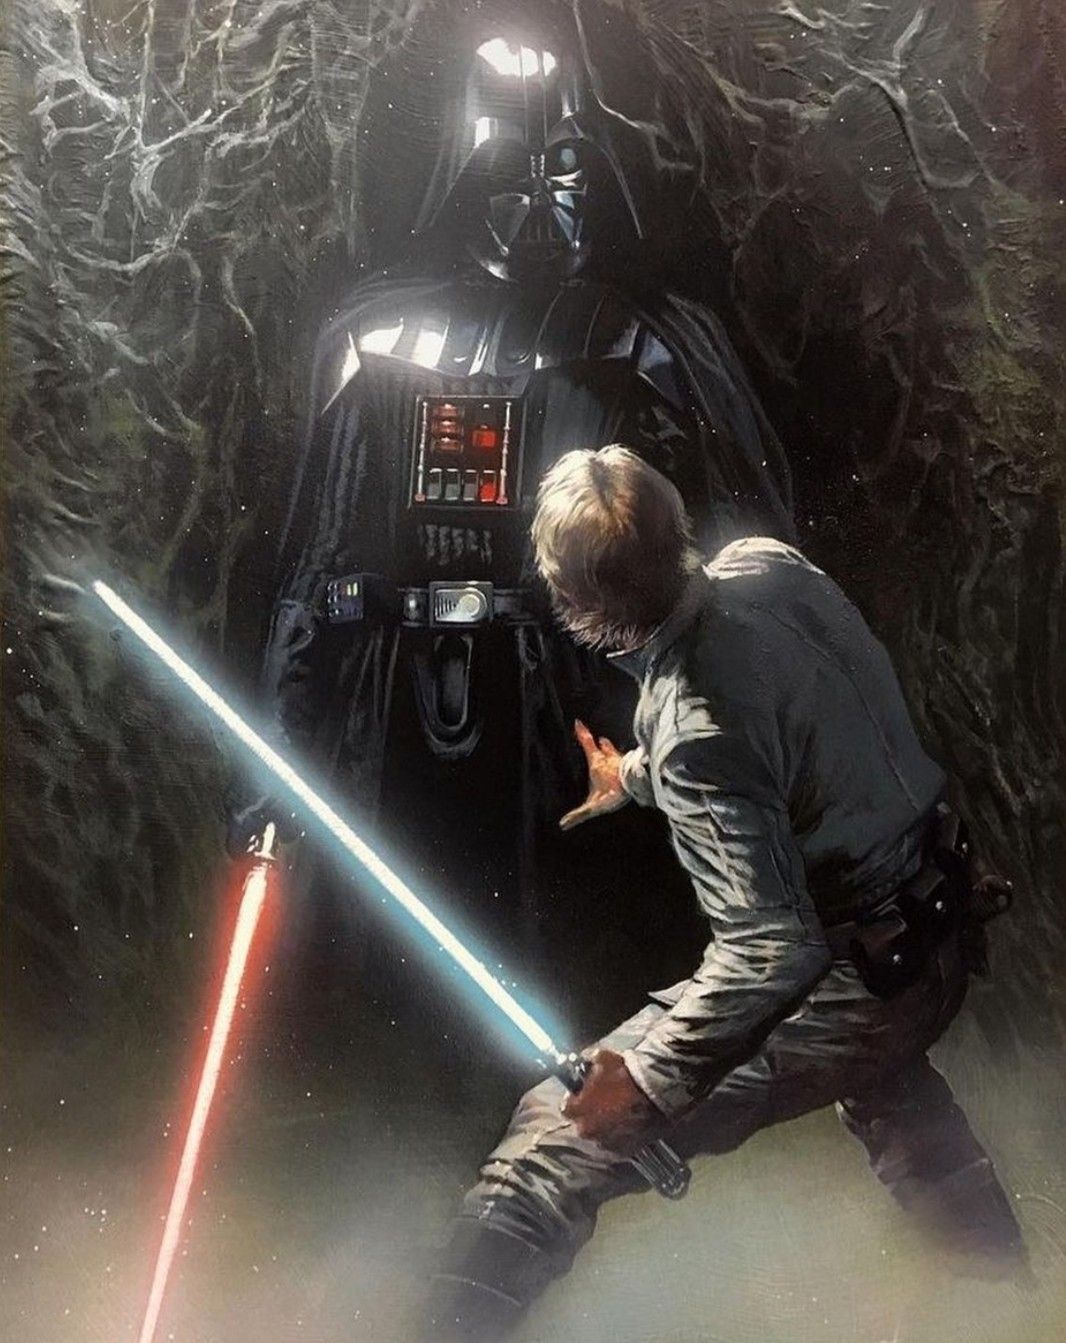 Luke Skywalker Vs Darth Vader In Degobah. Star wars, Vader star wars, Darth vader